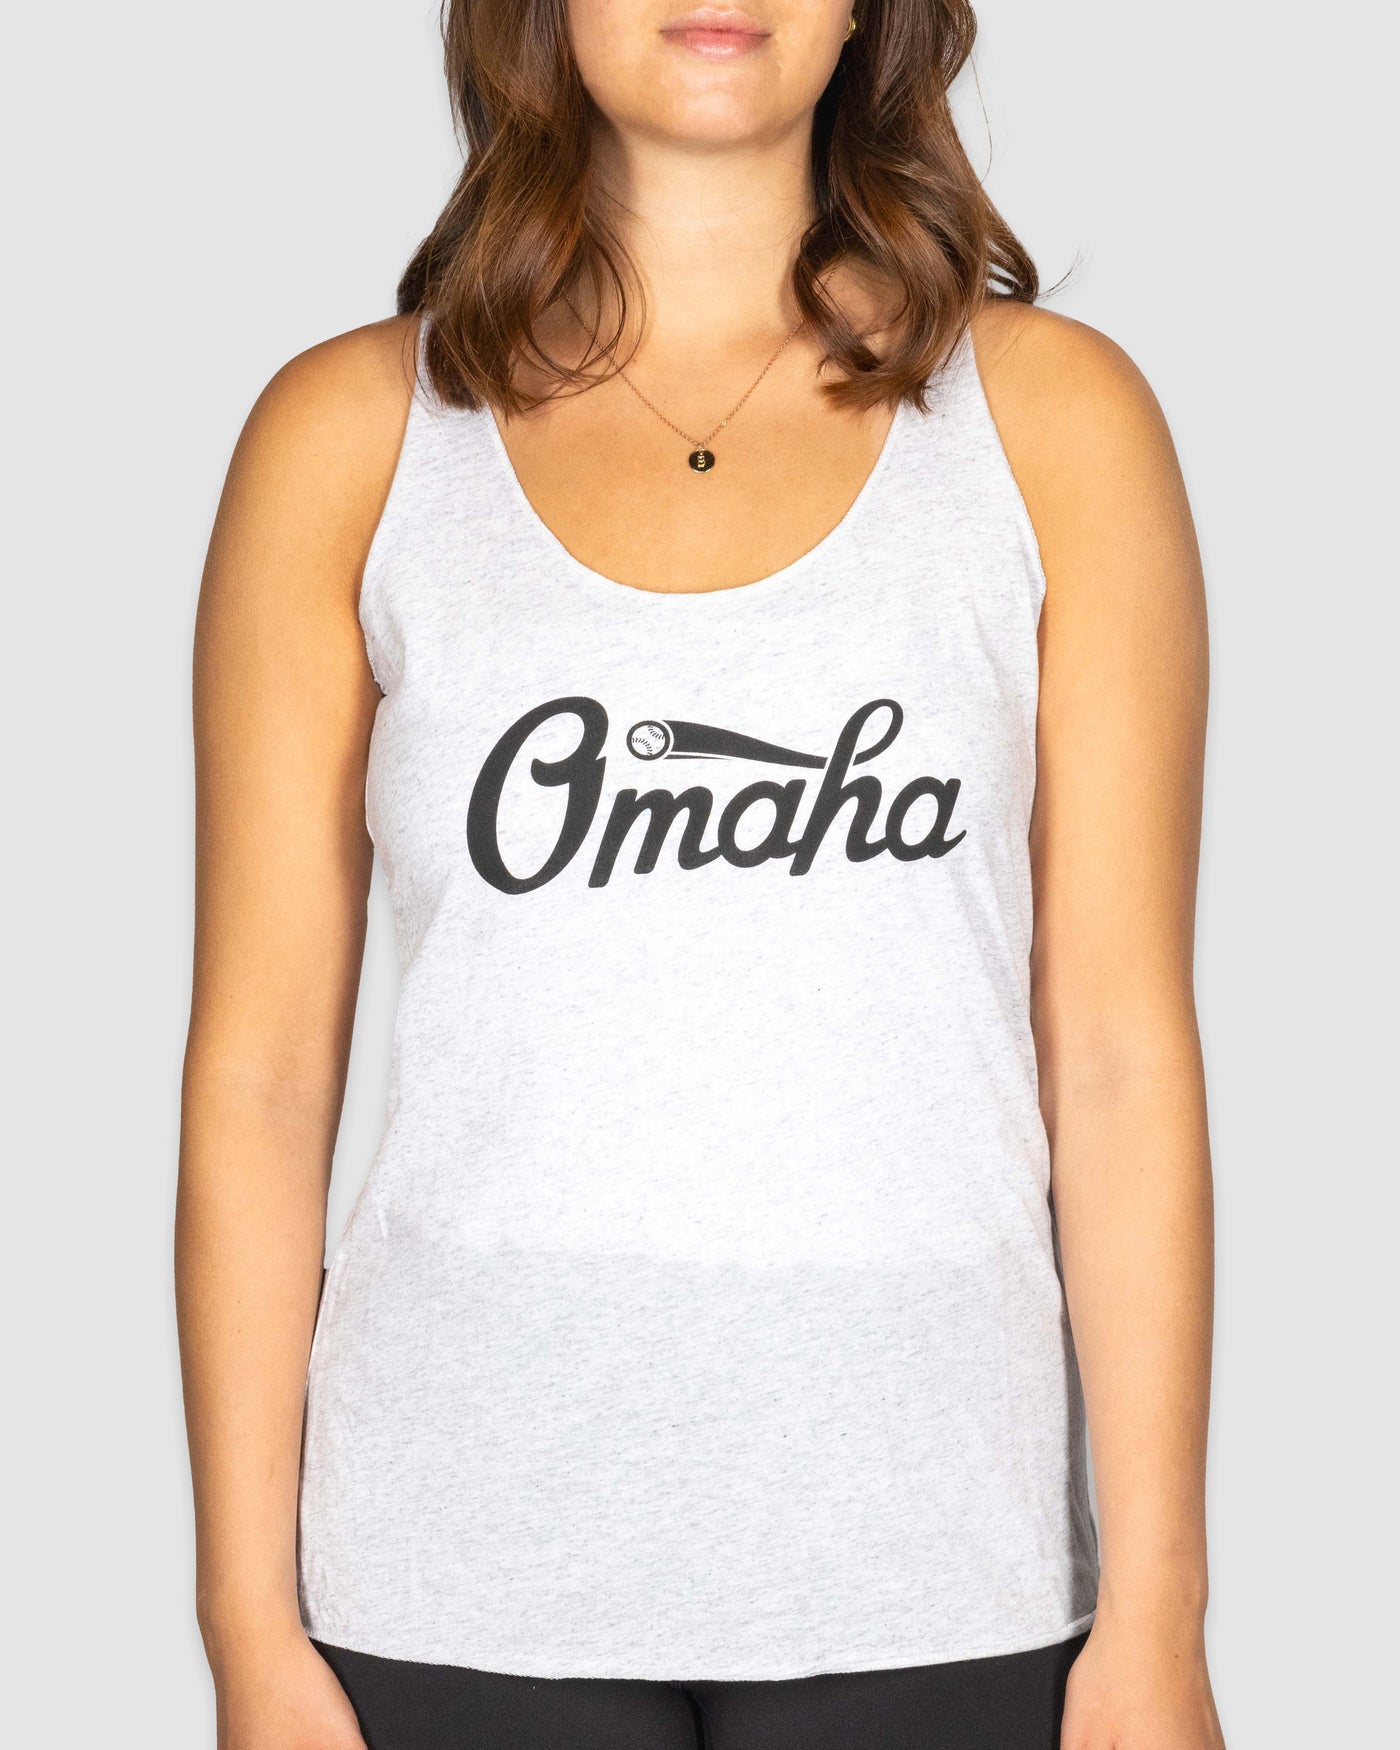 Camiseta sin mangas Omaha Script - Azul marino y blanco